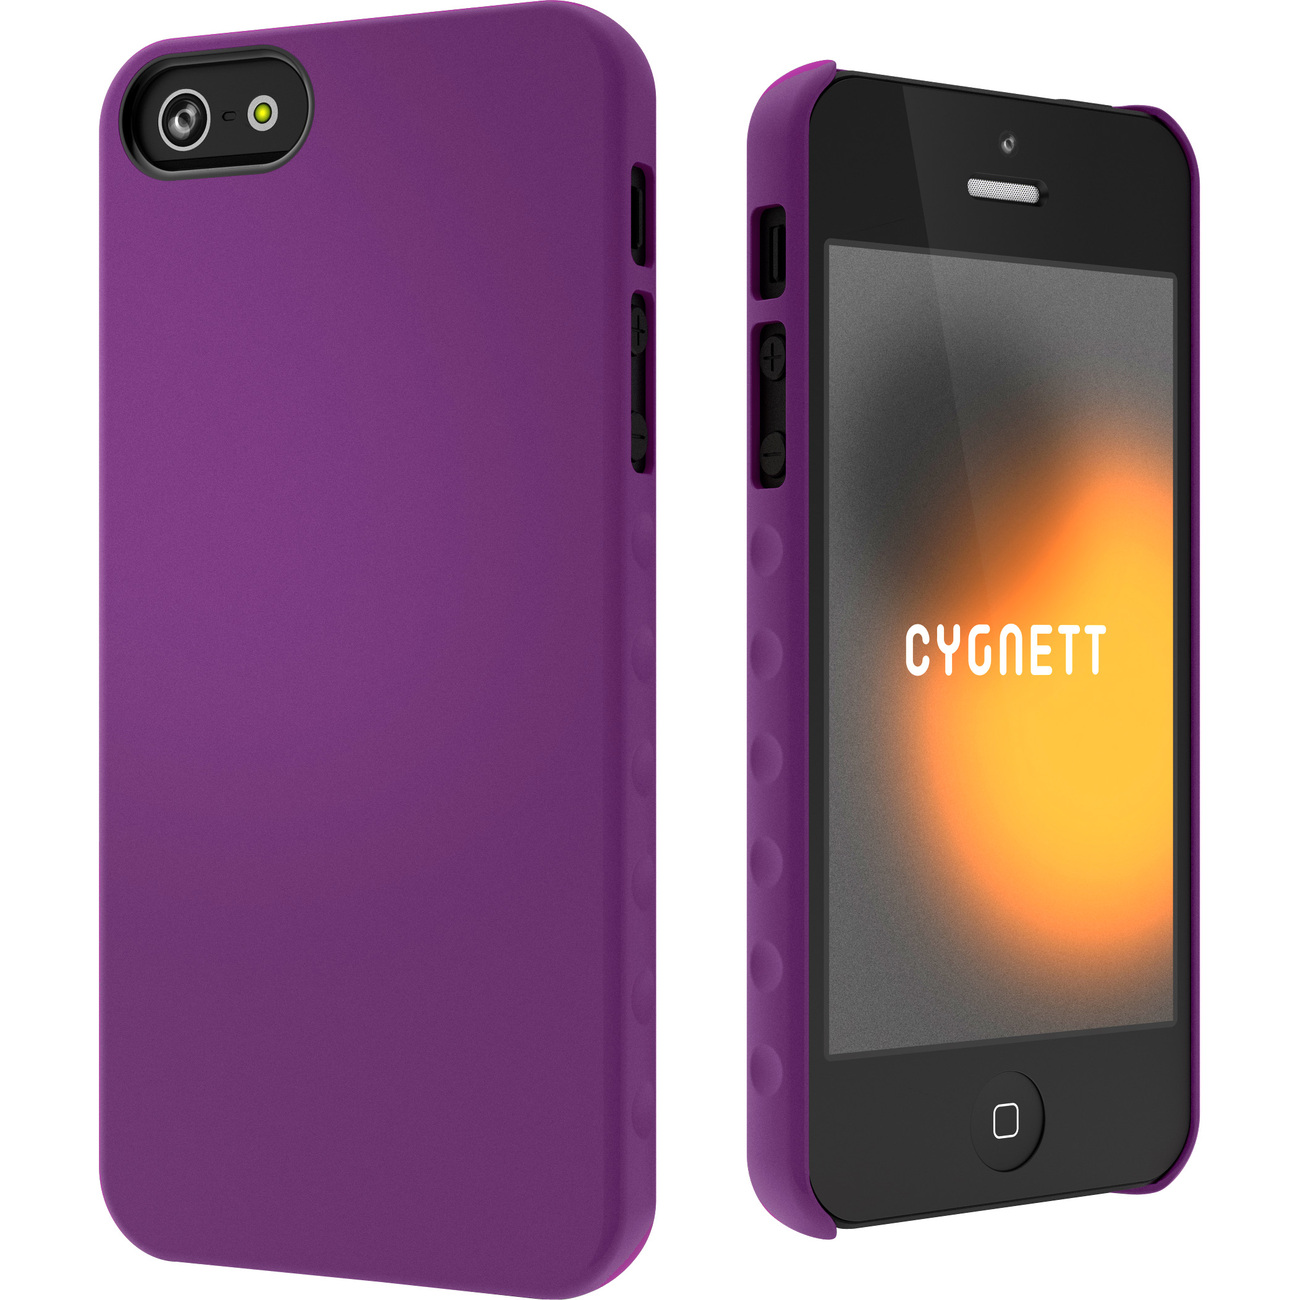 CYGNETT iPhone 5 Case, Aero Grip Purple Feel